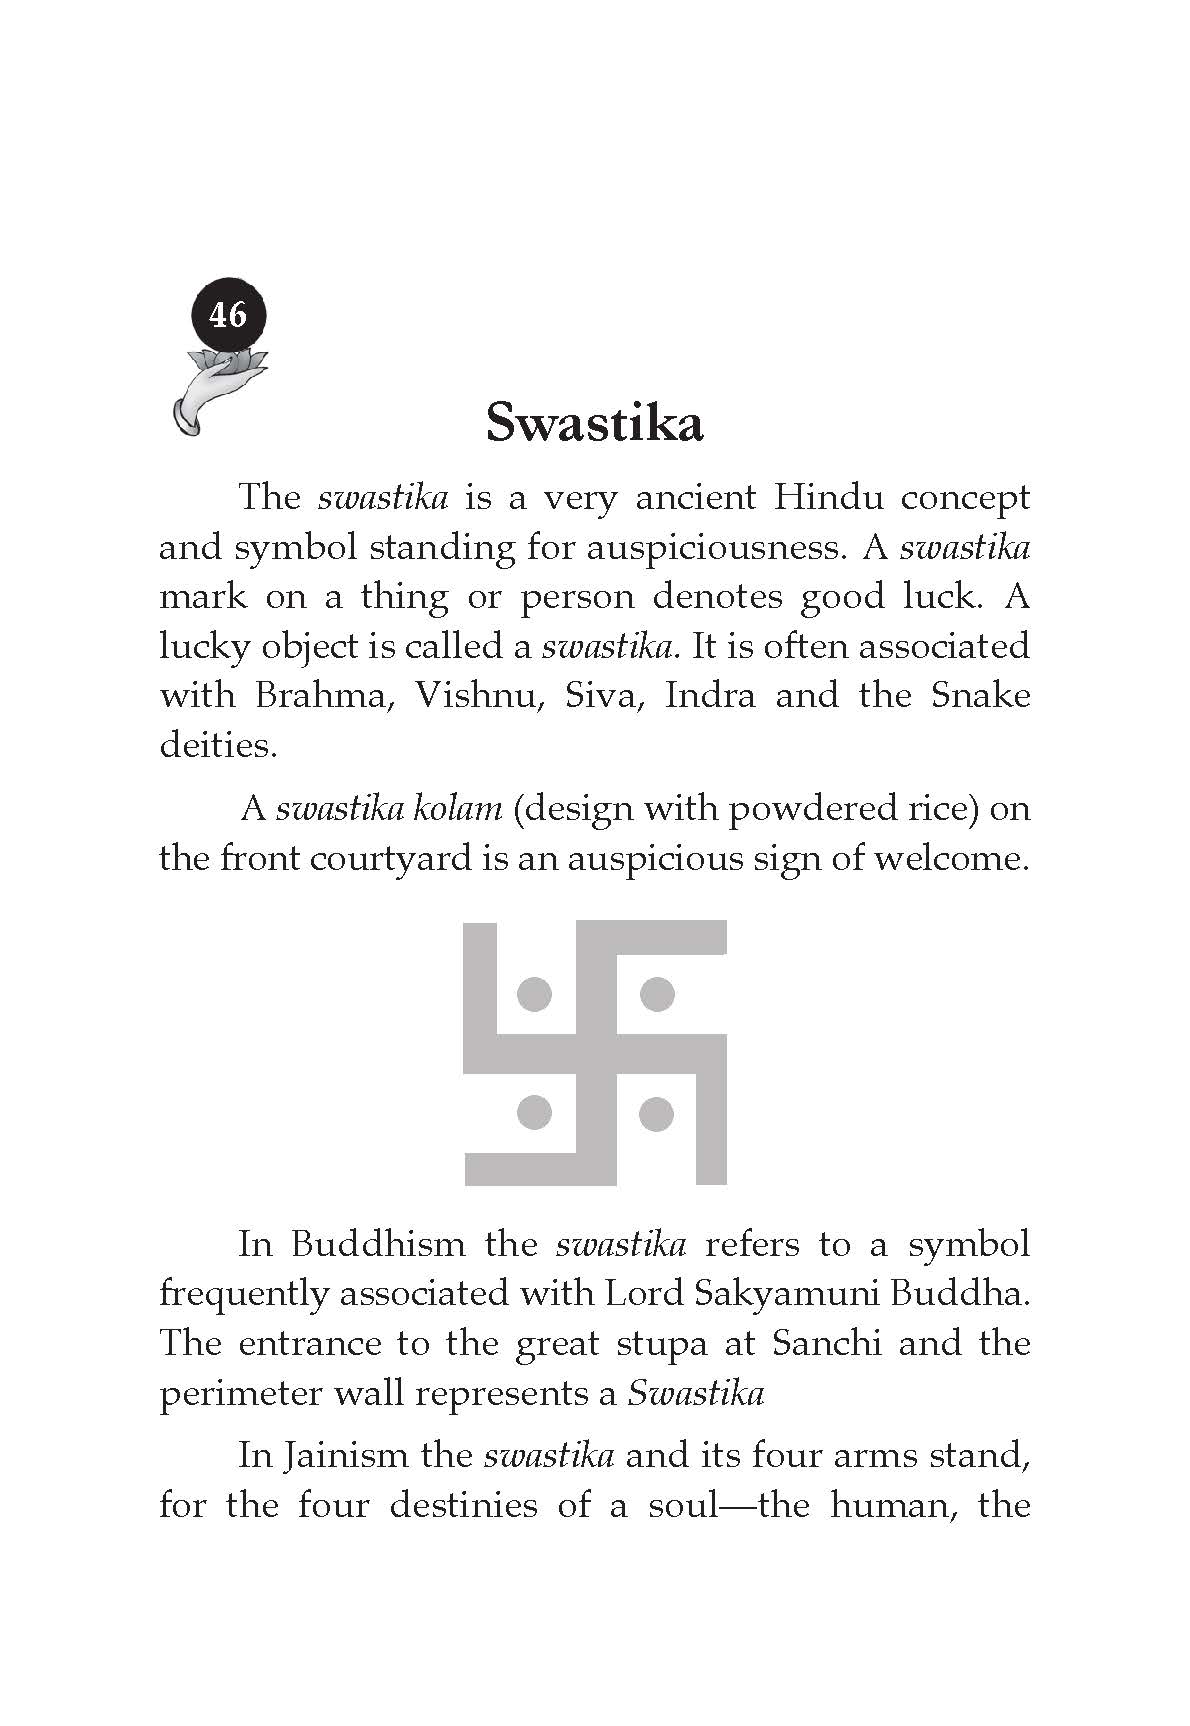 Understanding Pratika Symbols in the Indian Tradition